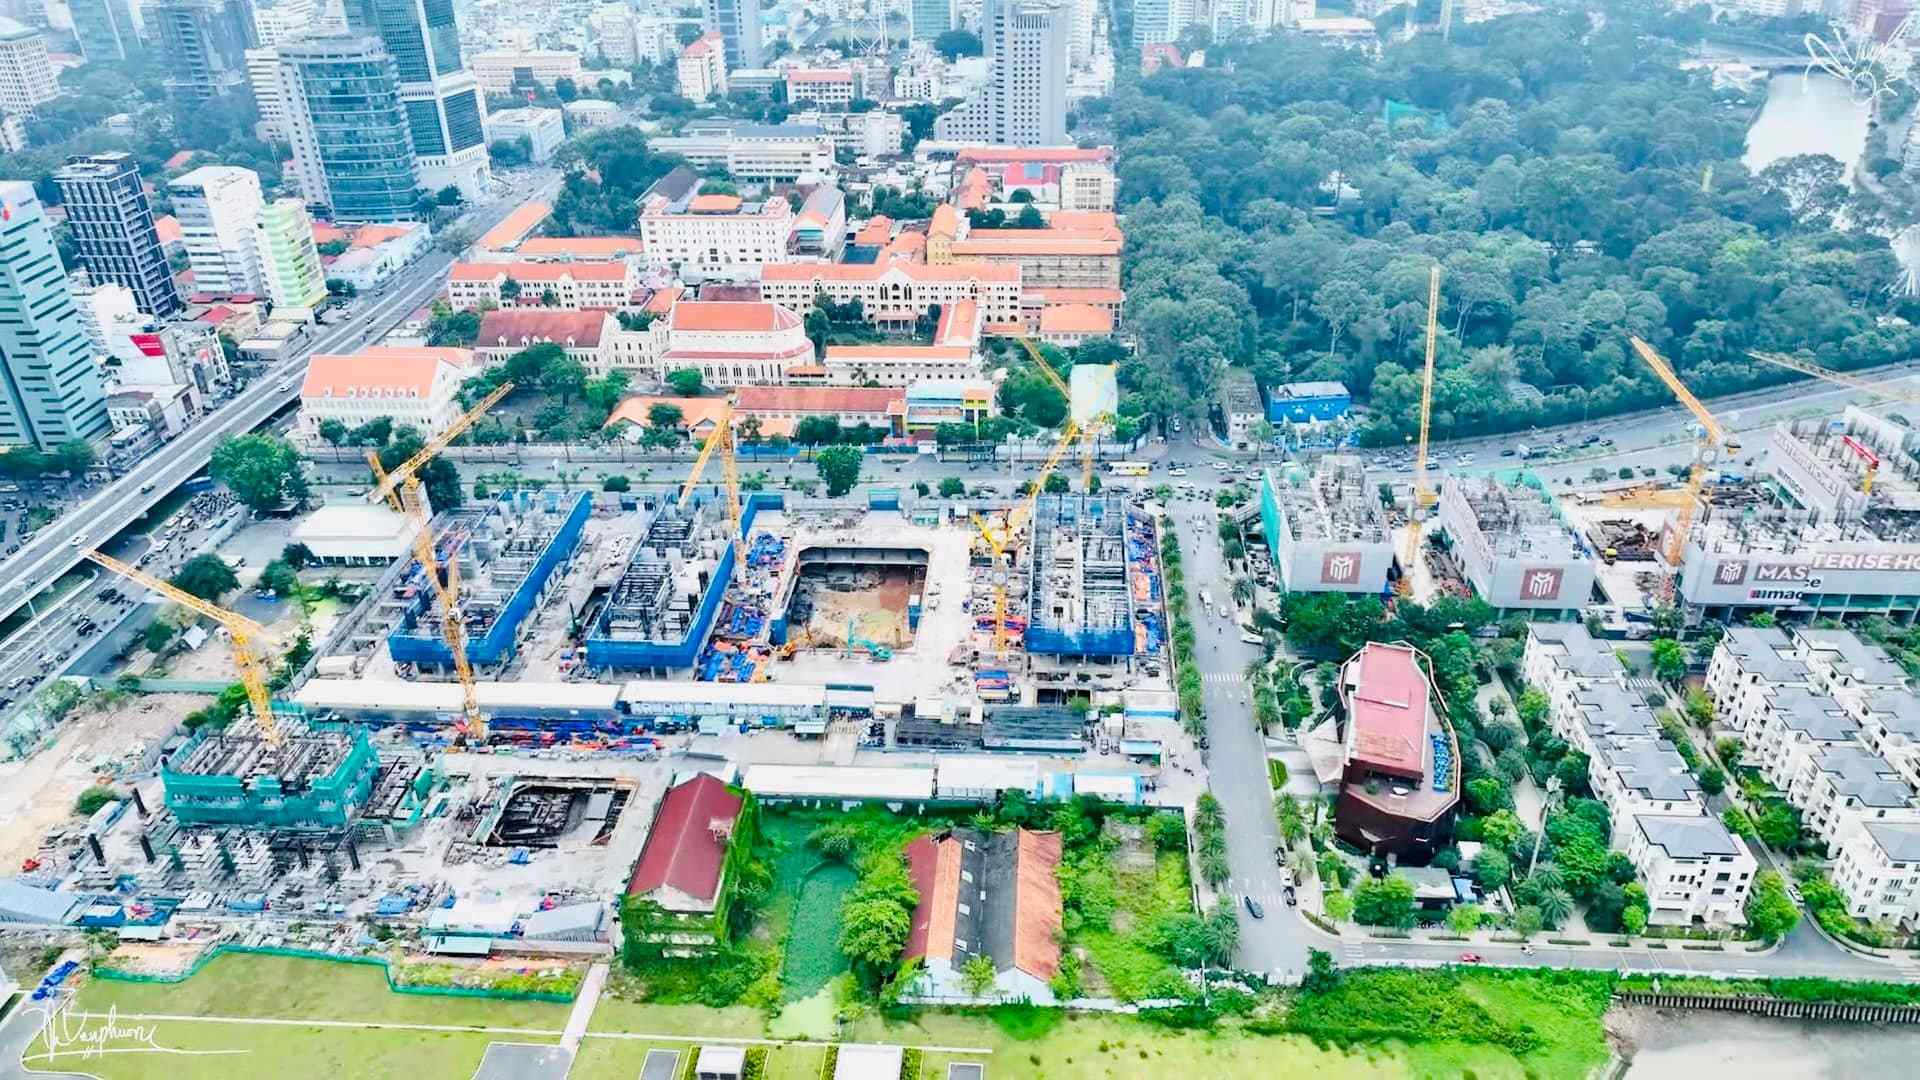 Grand Marina Sai Gon on August 10, 2022, everyone! Progress is very good. 